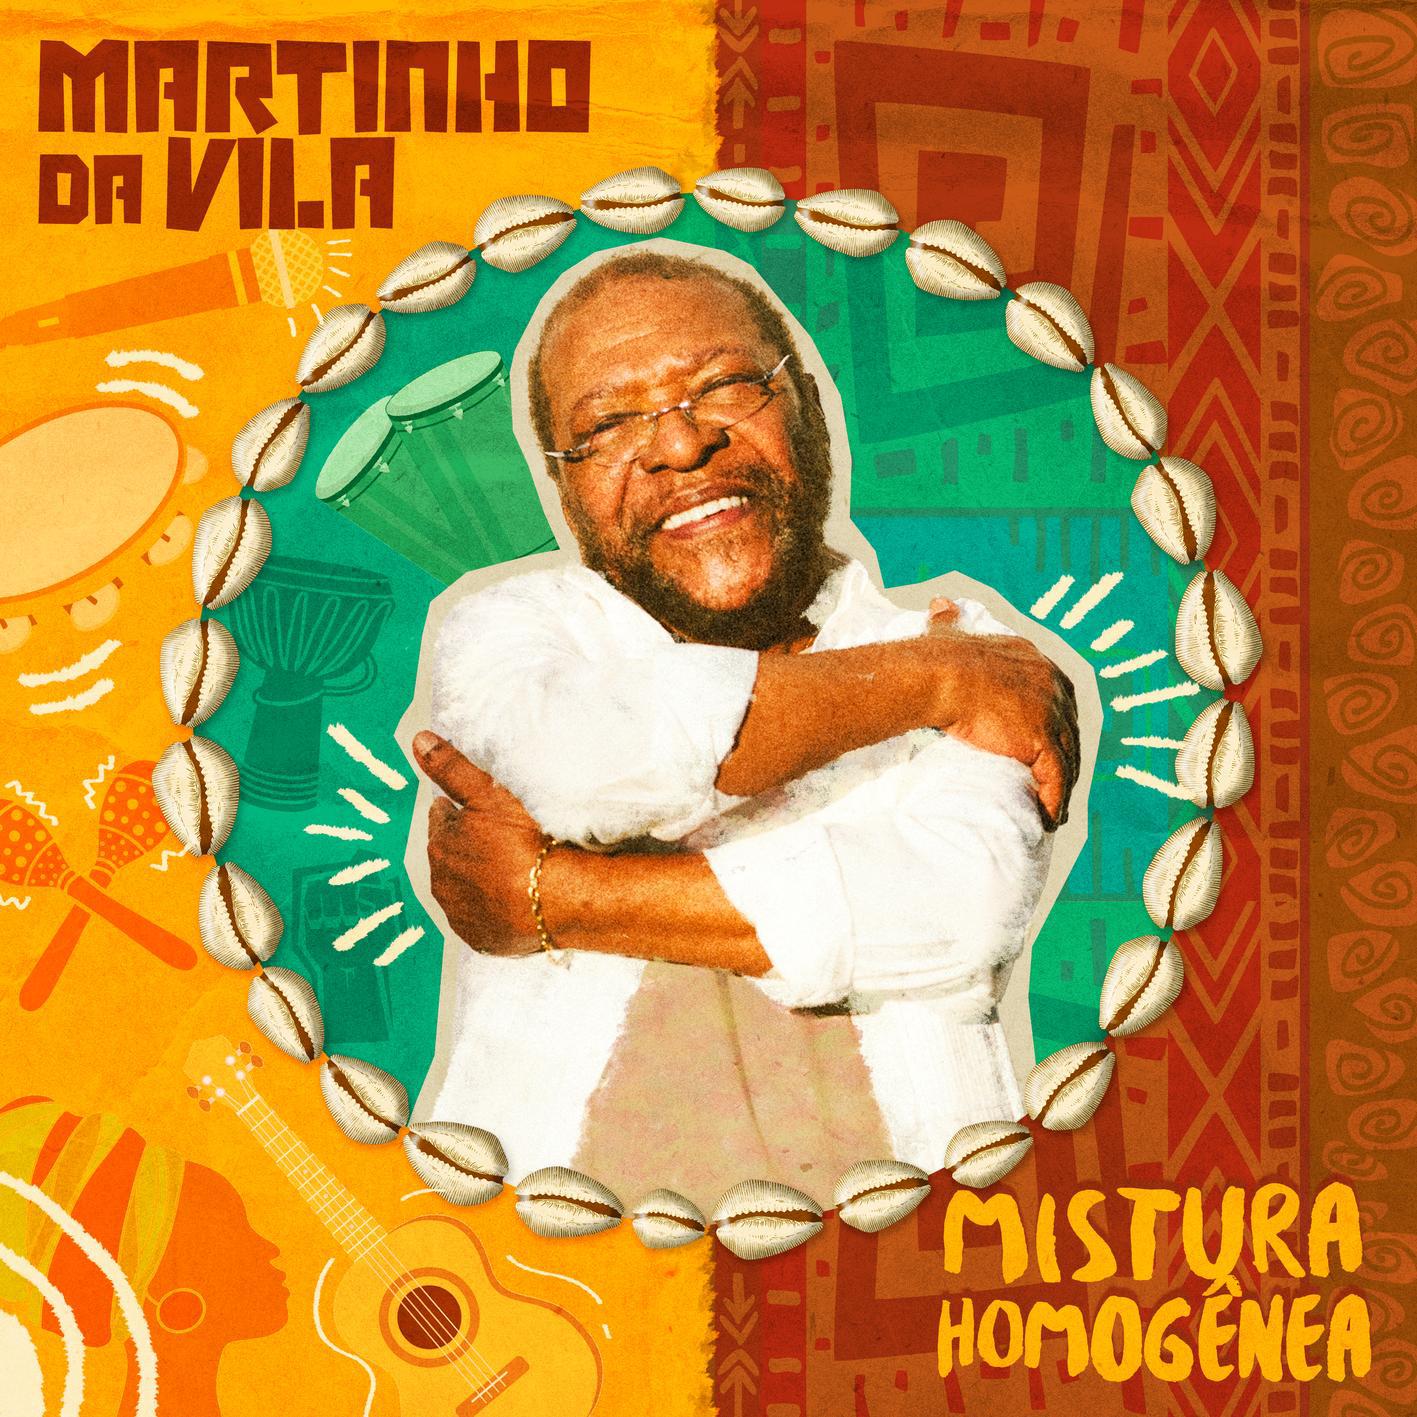 Martinho da Vila - Viva Martina